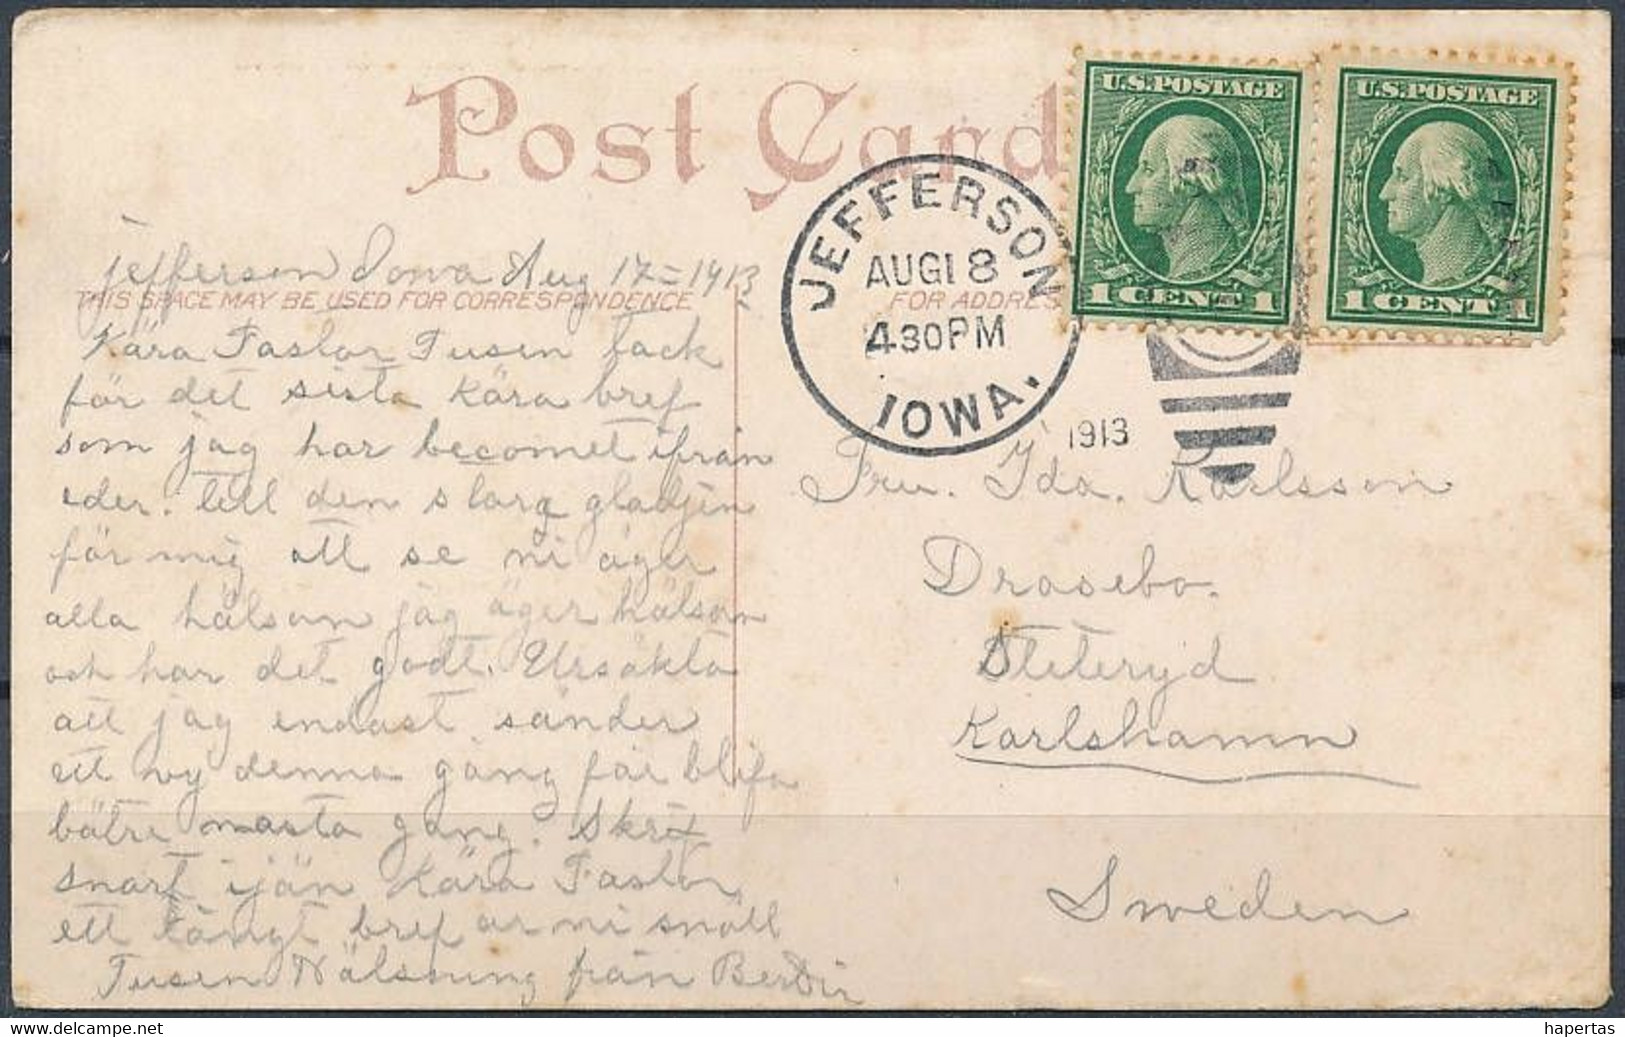 Omaha Auditorium, Omaha, Neb. / Postmark - Posted 1913 - Omaha